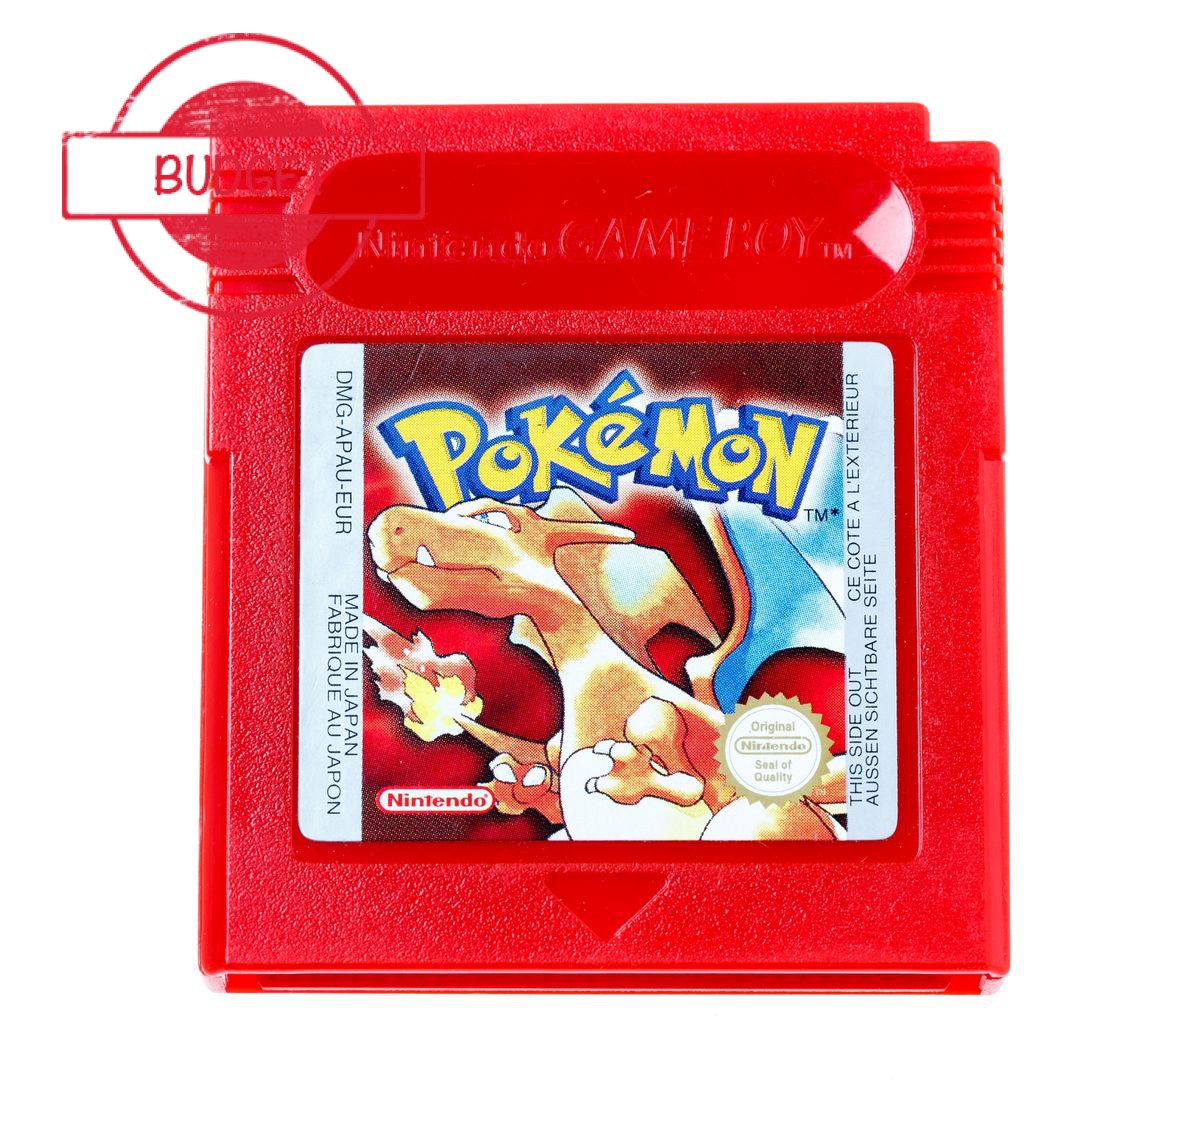 Pokemon Red - Budget Kopen | Gameboy Classic Games